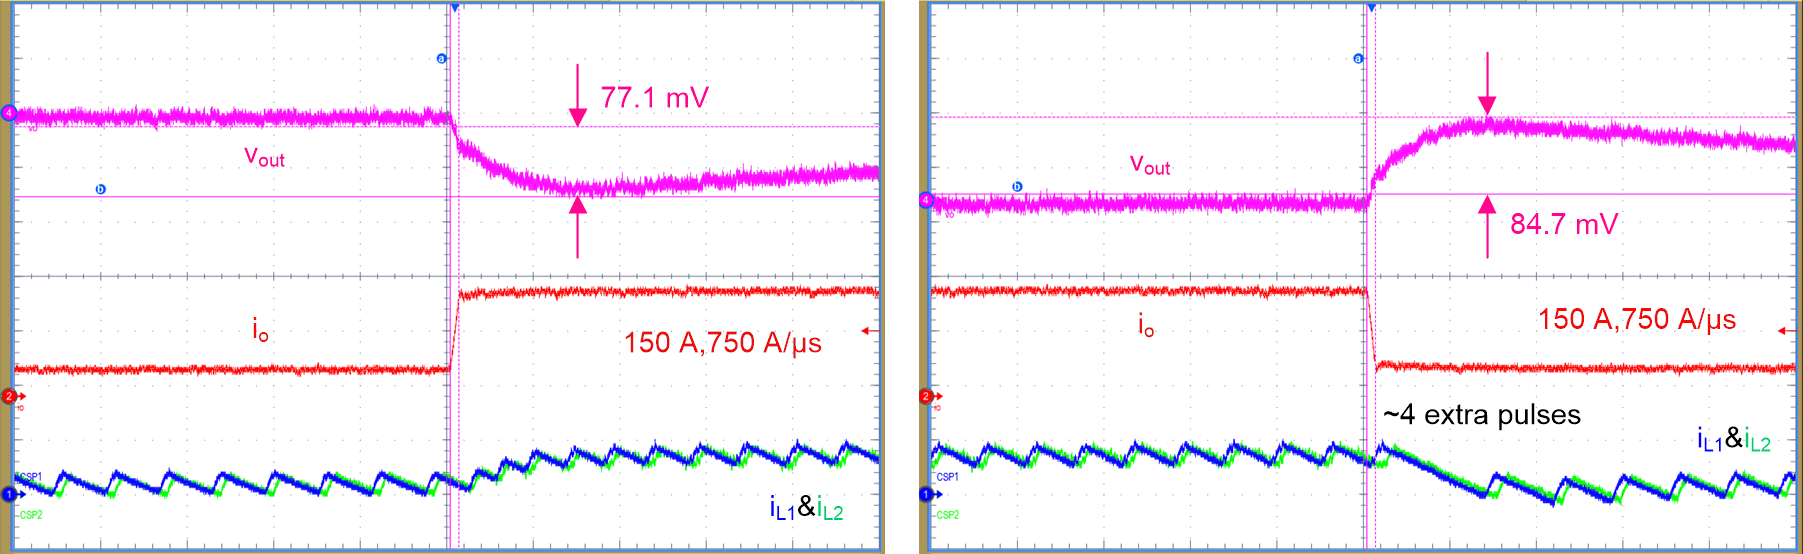 waveform-02-load-transient-waveforms-of-example-2-sluaa12.png